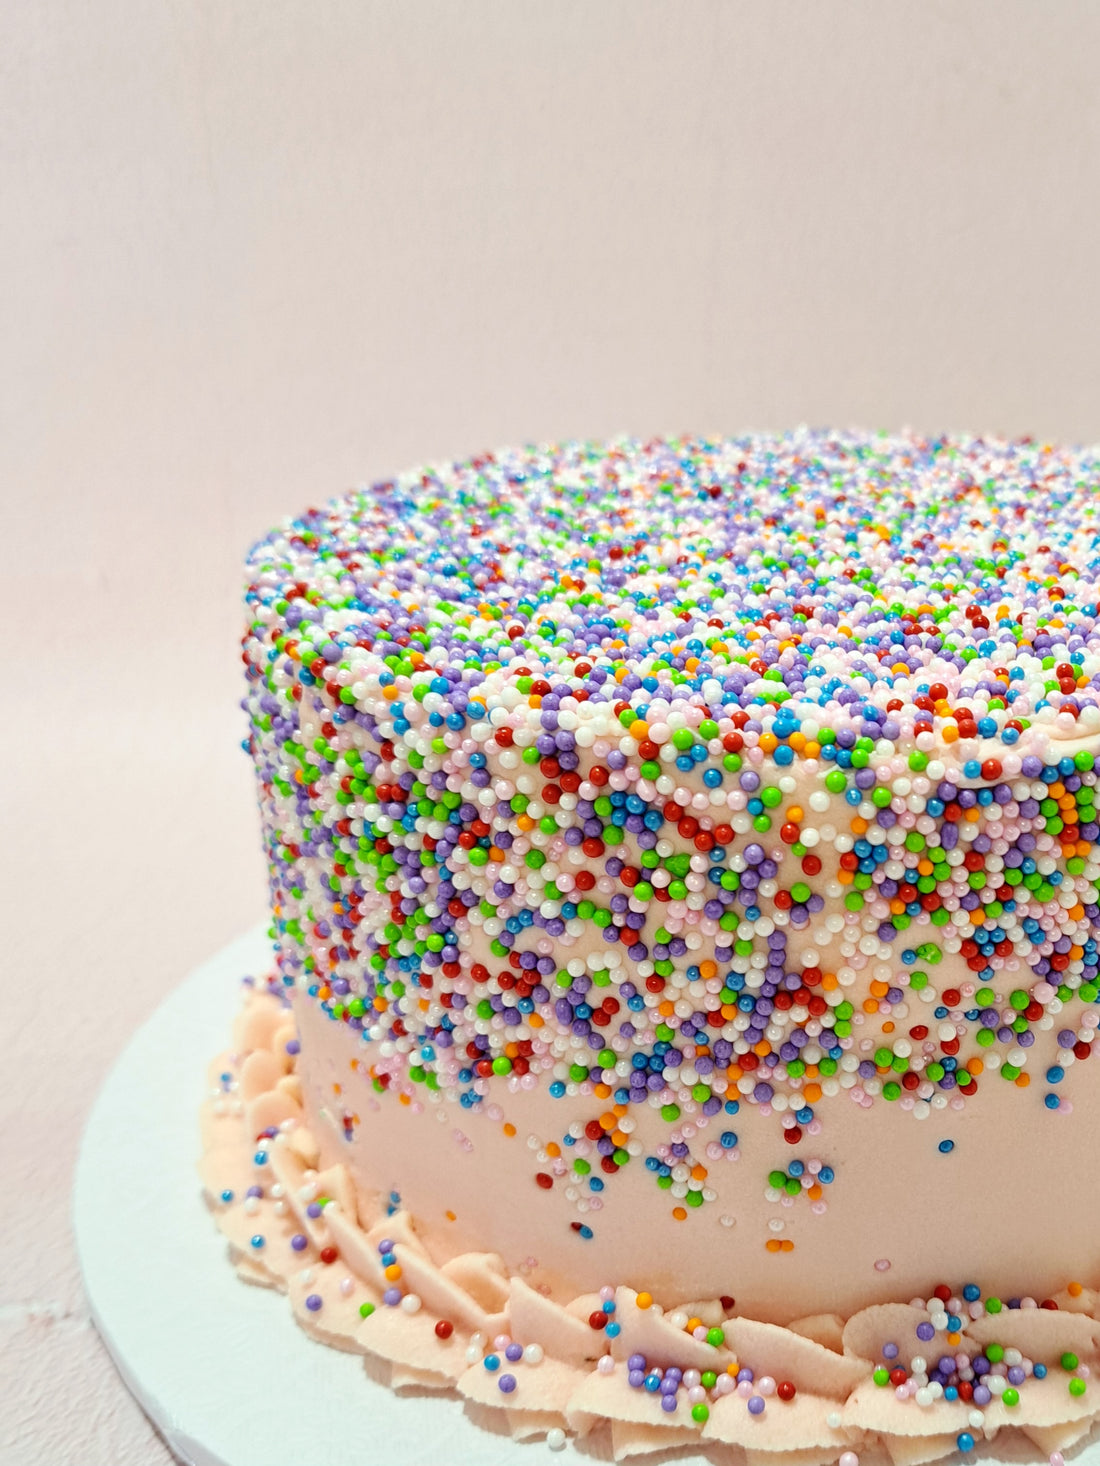 Covering a Sprinkle Cake – How Many Sprinkles Do I Need?